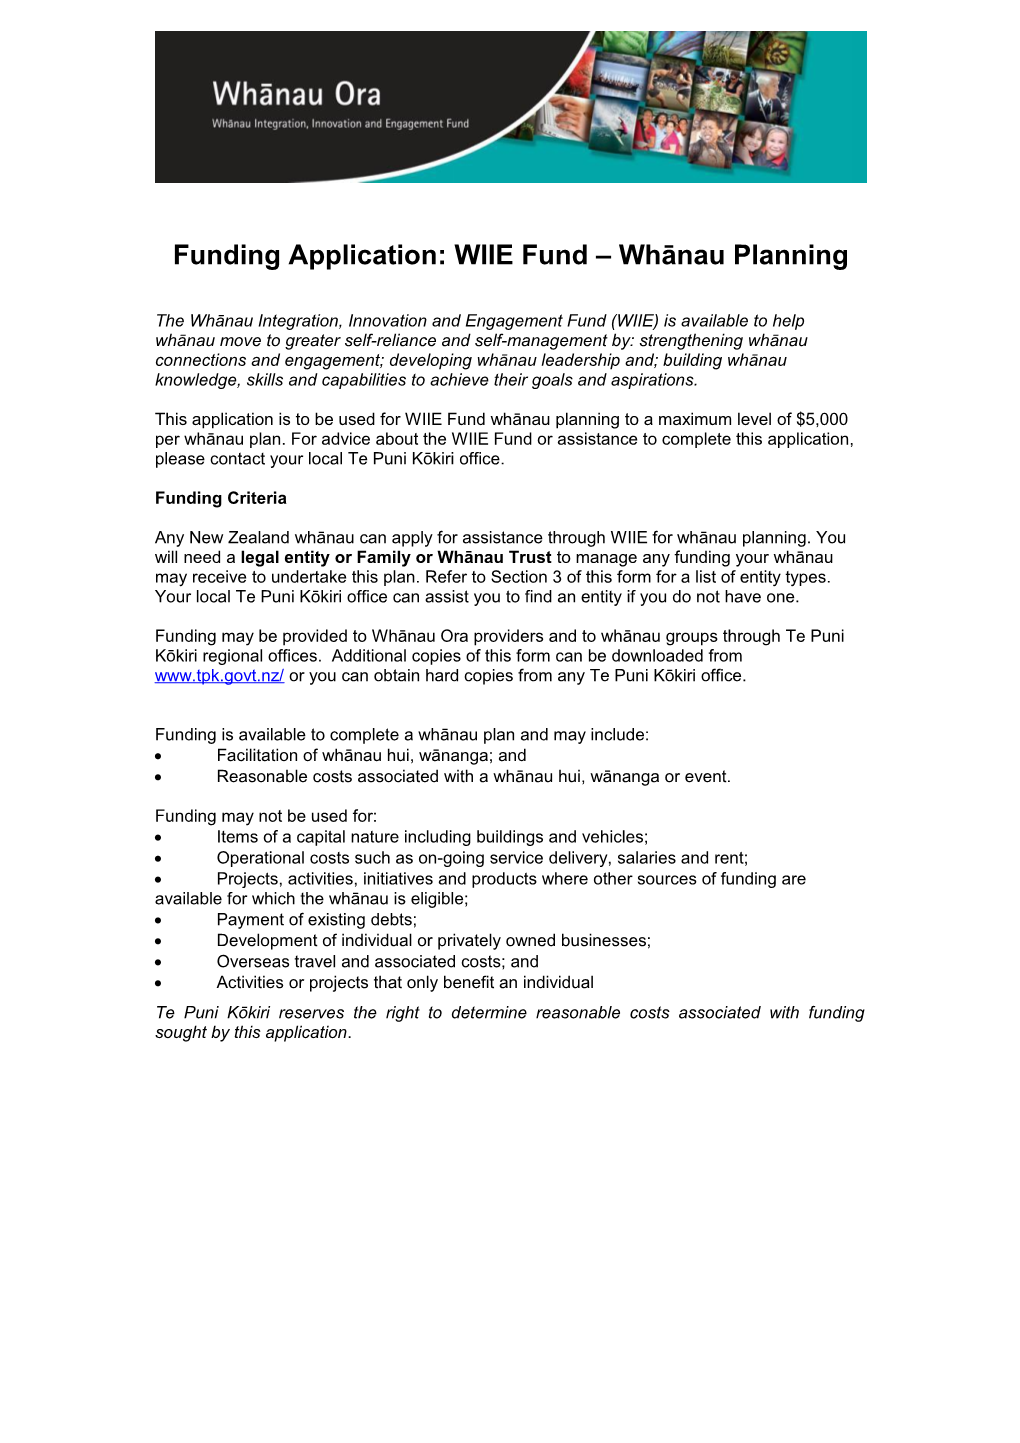 Funding Application: WIIE Fund - Whanau Planning